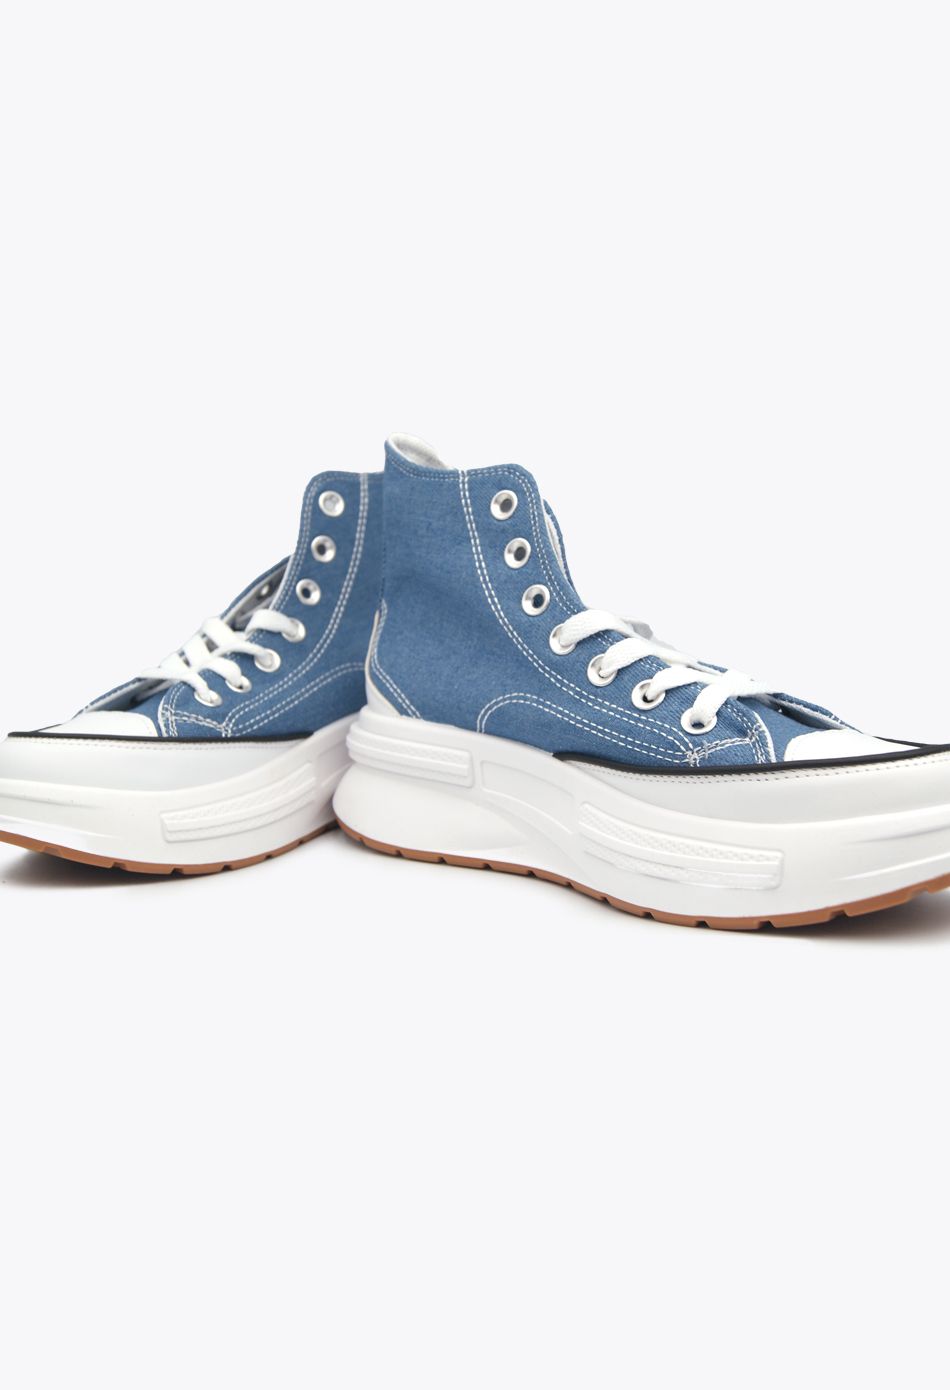 Sneakers Μποτάκια Πάνινα Μπλε / C895-blue Γυναικεία Αθλητικά και Sneakers joya.gr